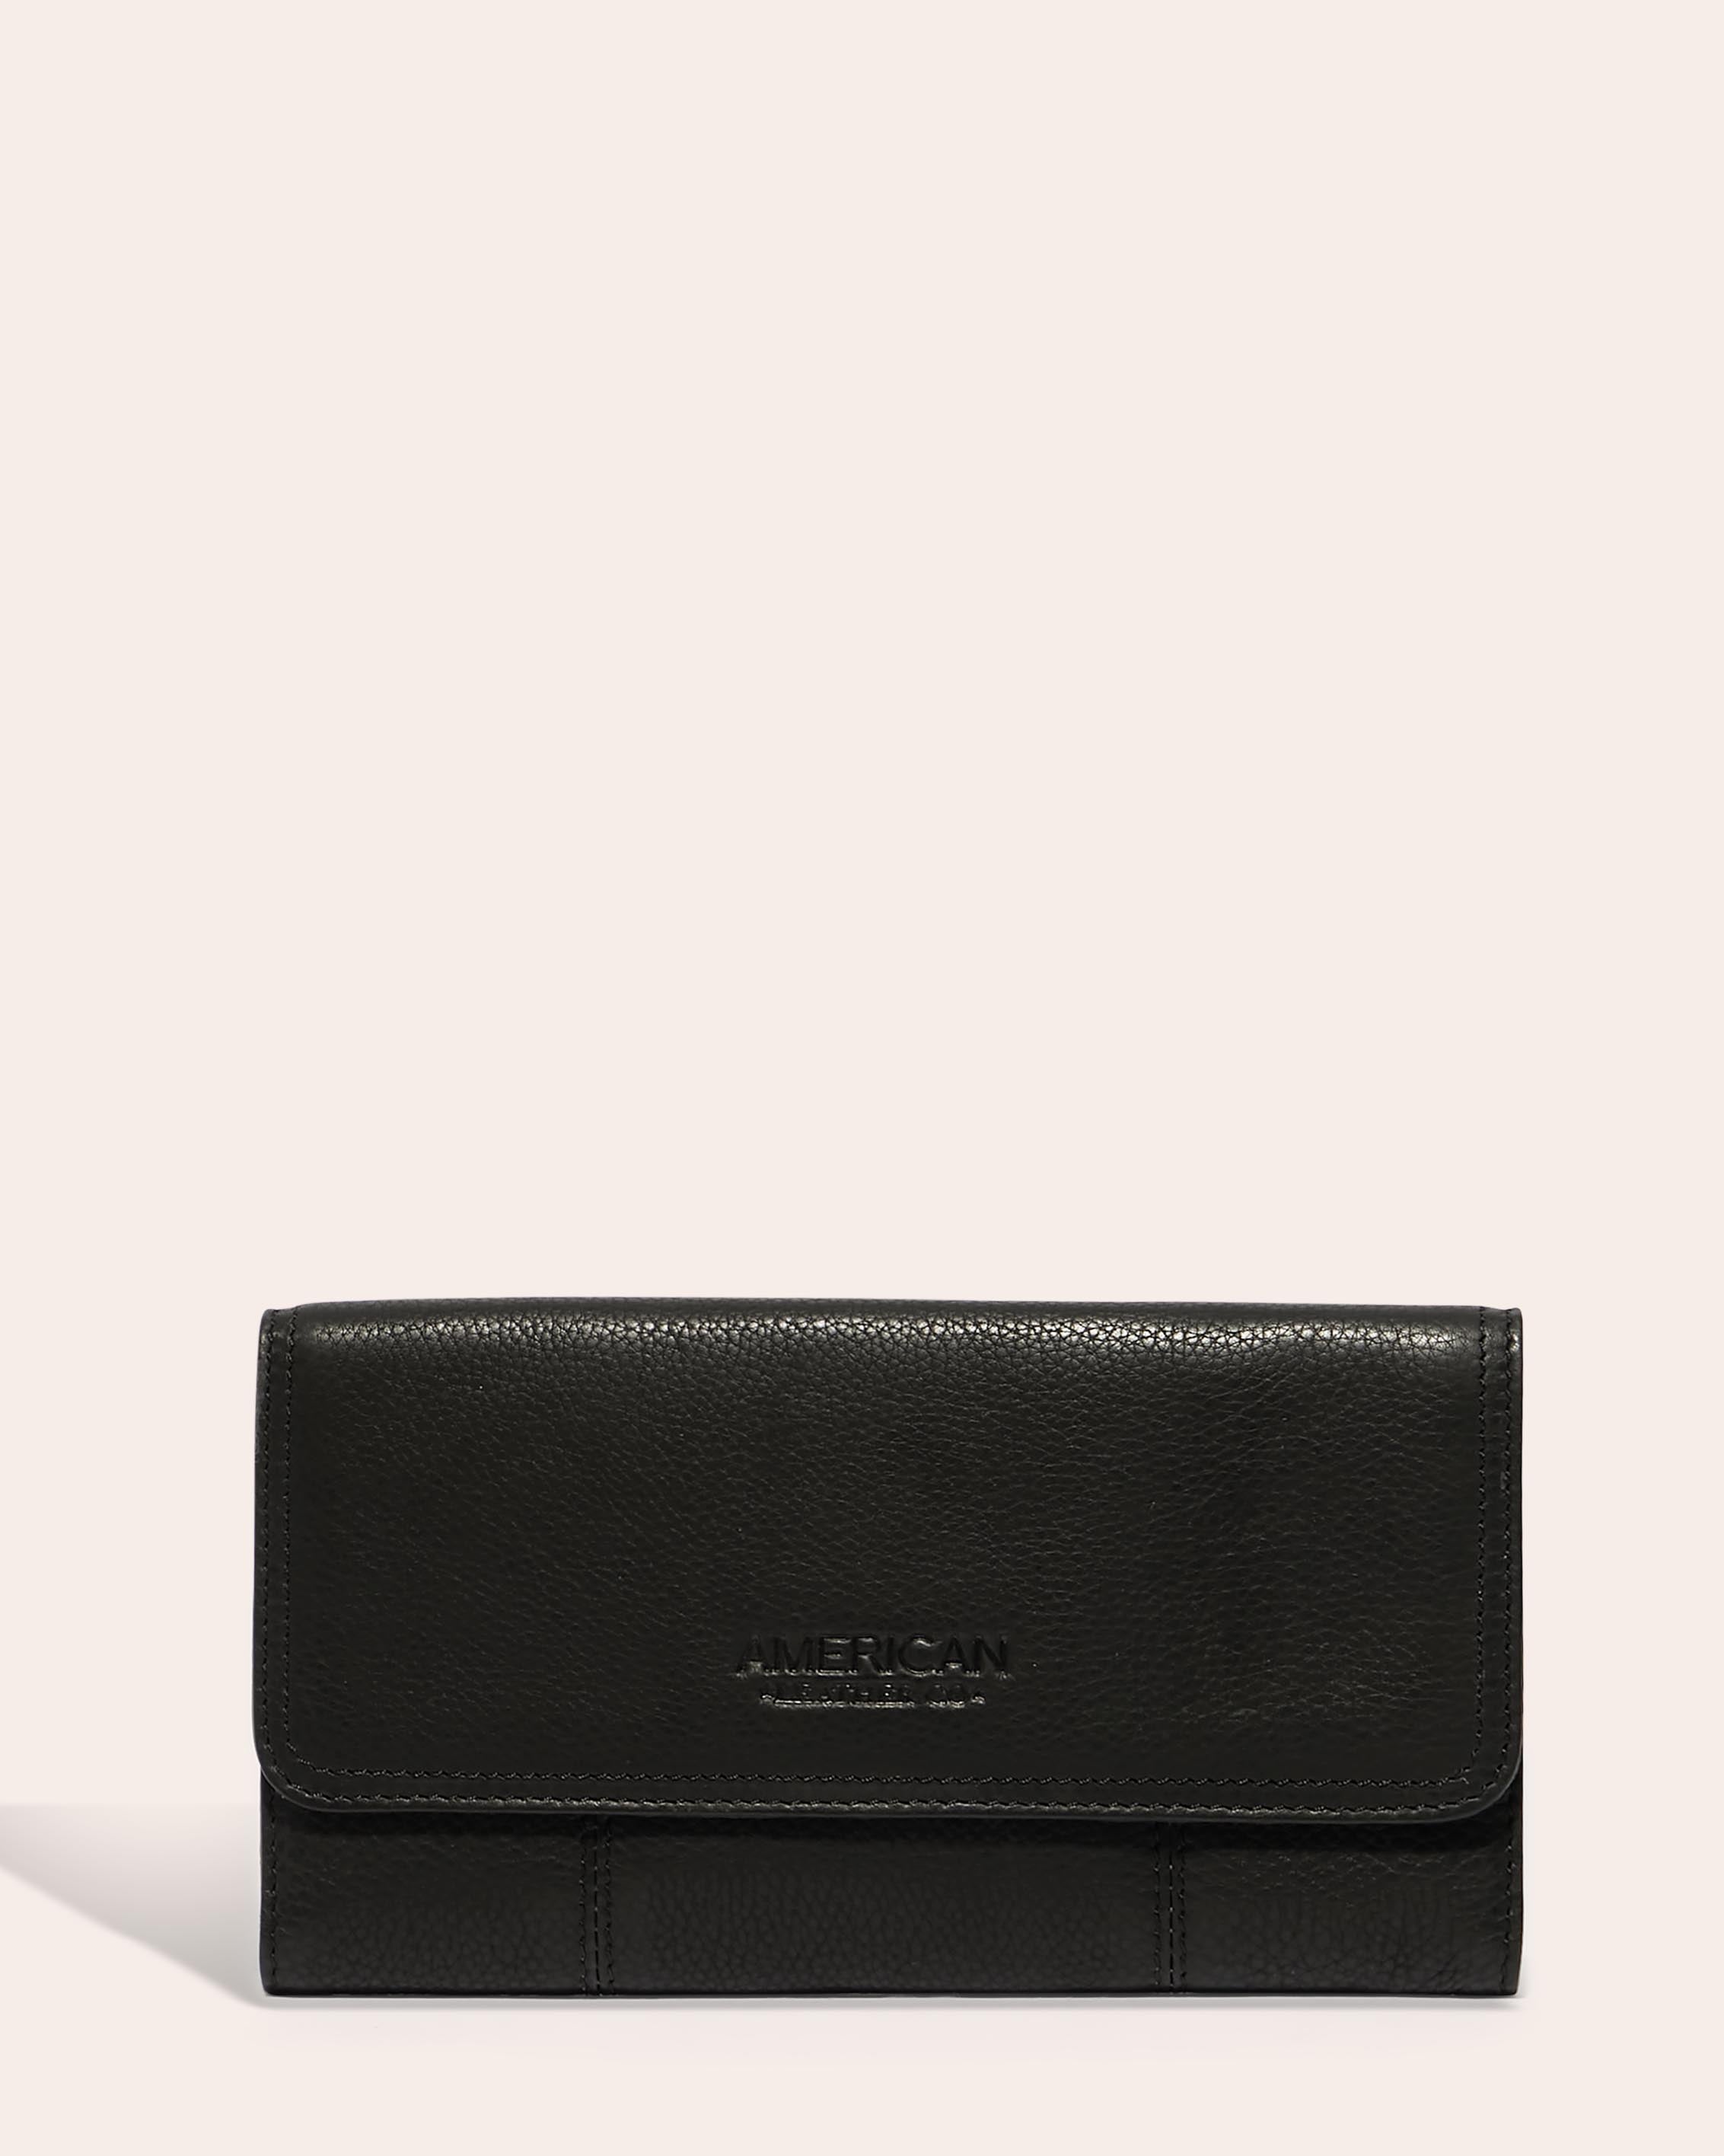 Julian Traditional Bifold in Black | American Leather Co.